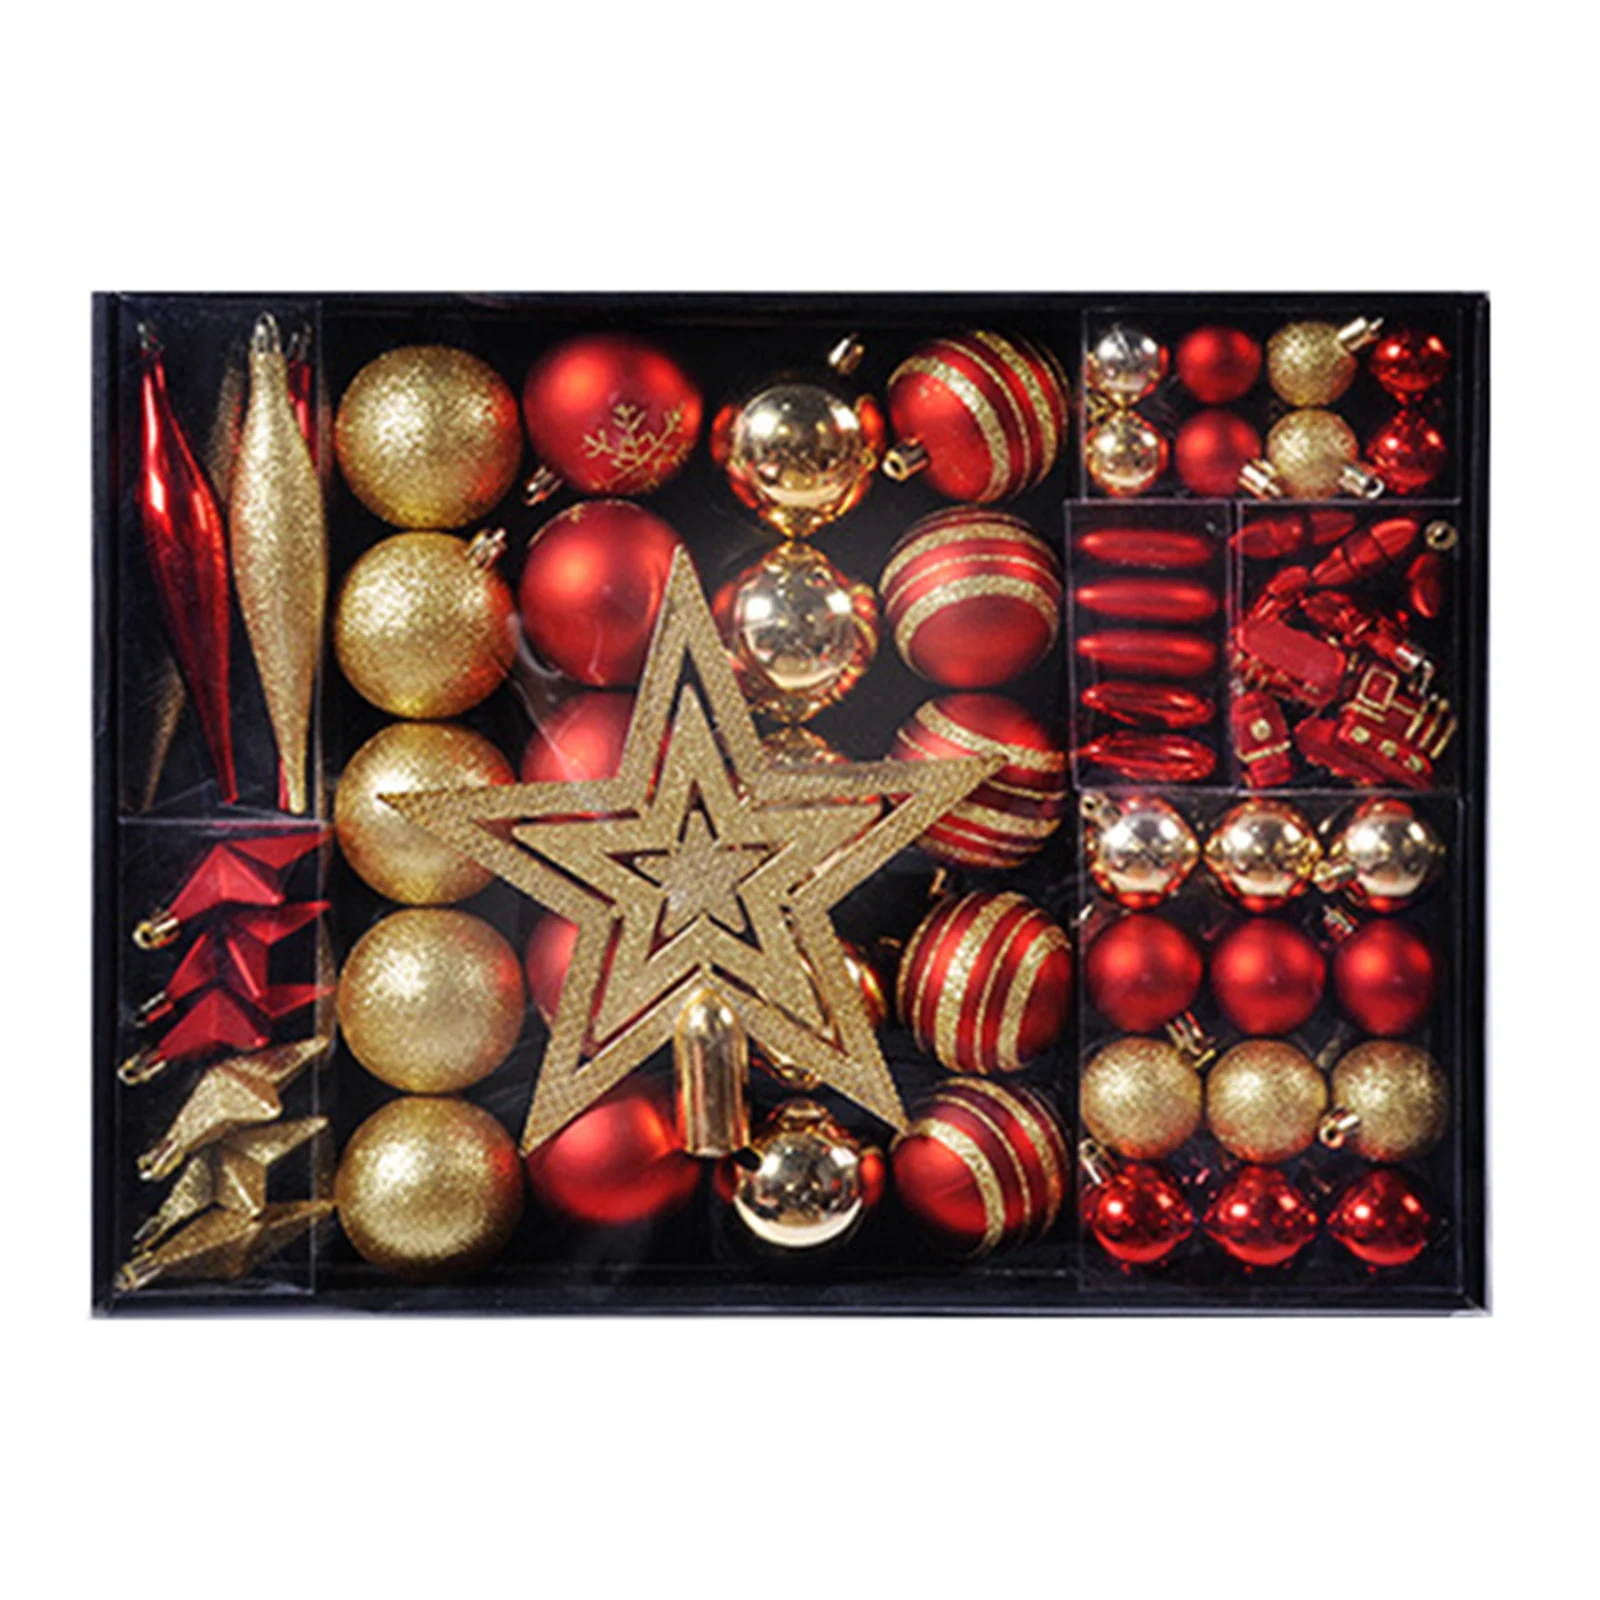 

88PCS Christmas Ball Gift Box Ornaments Various Shapes Painted Balls Pedent For Xmas Tree Holiday Wedding Party Decorations